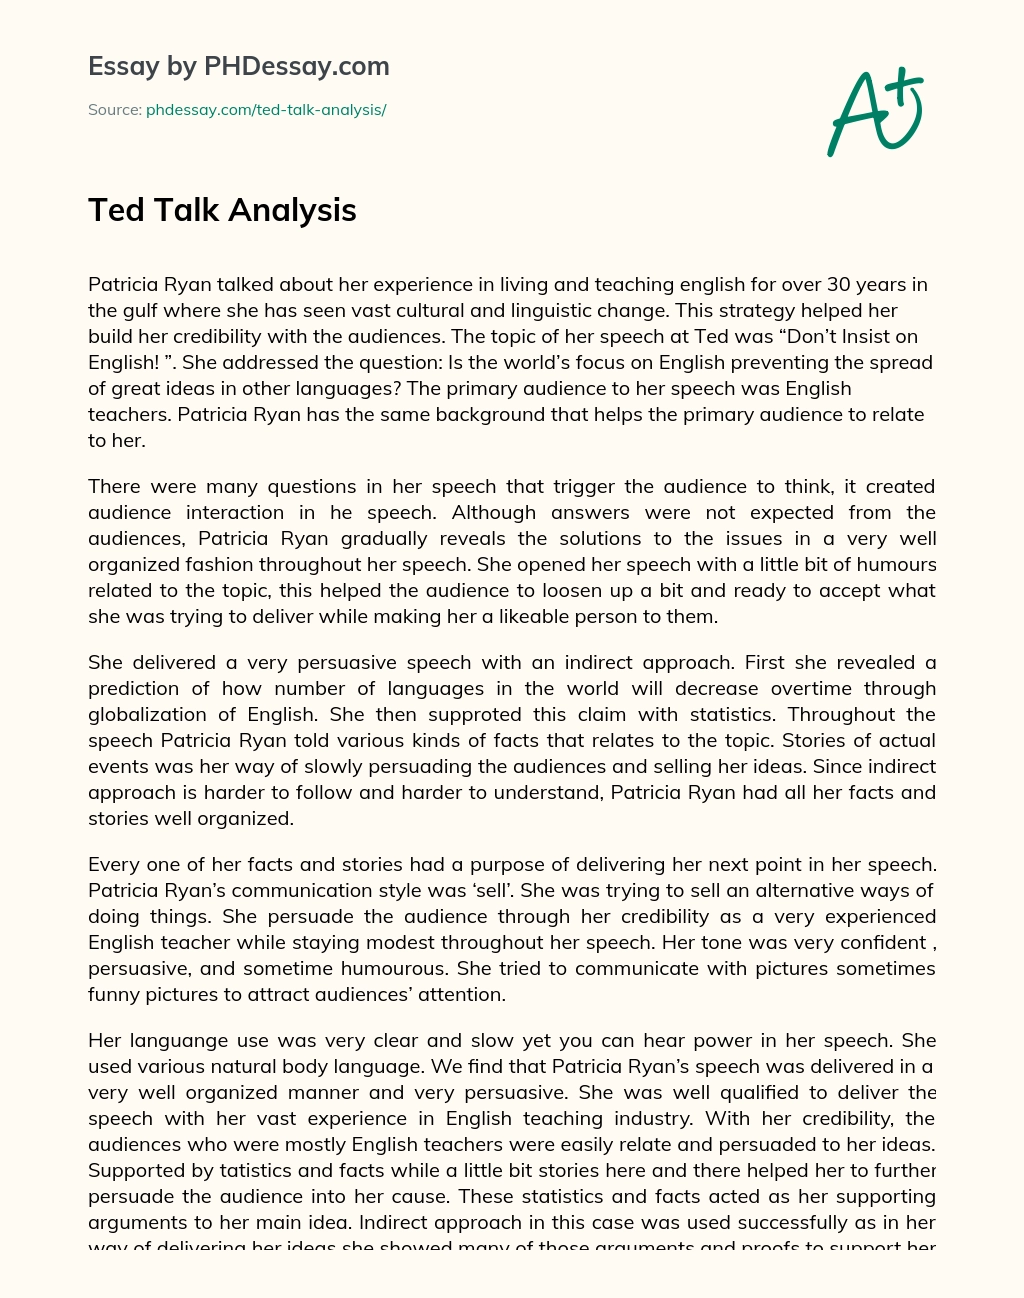 ted-talk-analysis-essay-speech-example-500-words-phdessay